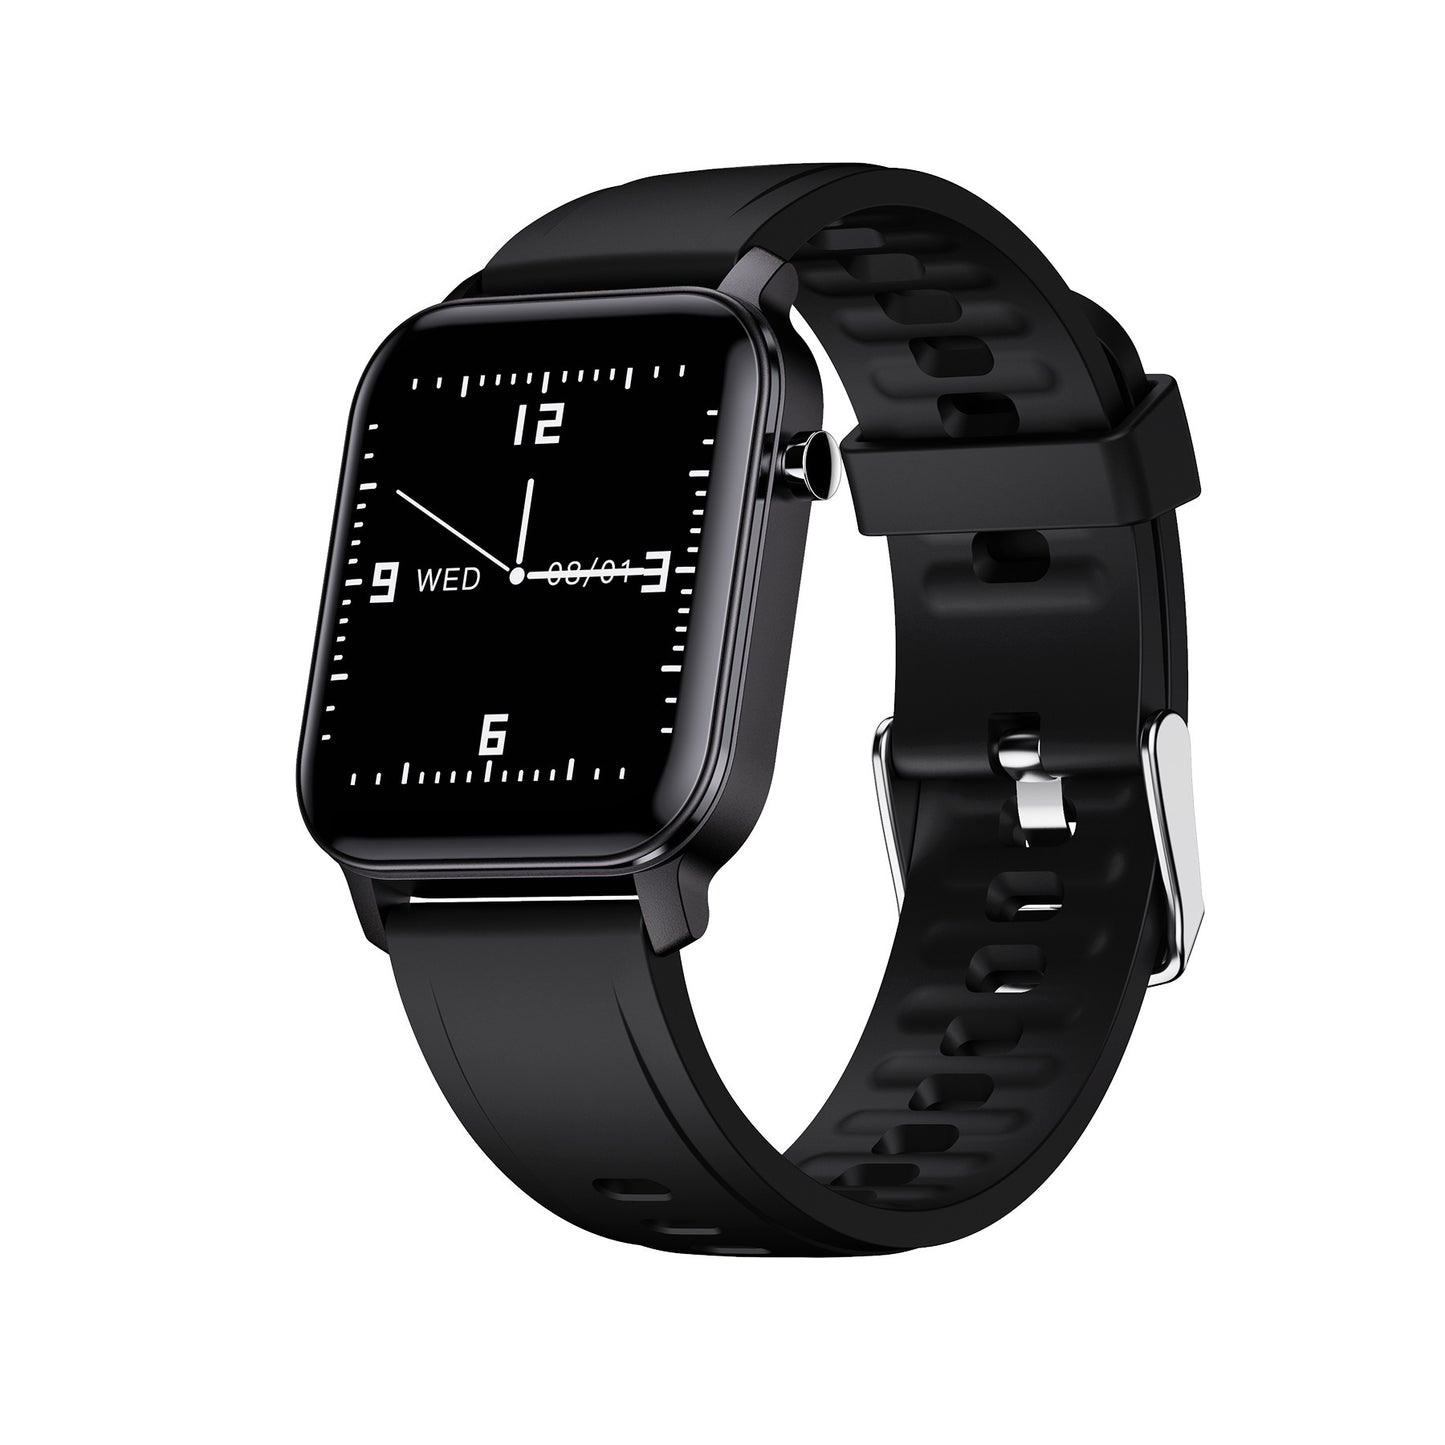 1.4 inch ultra-large screen slim watch